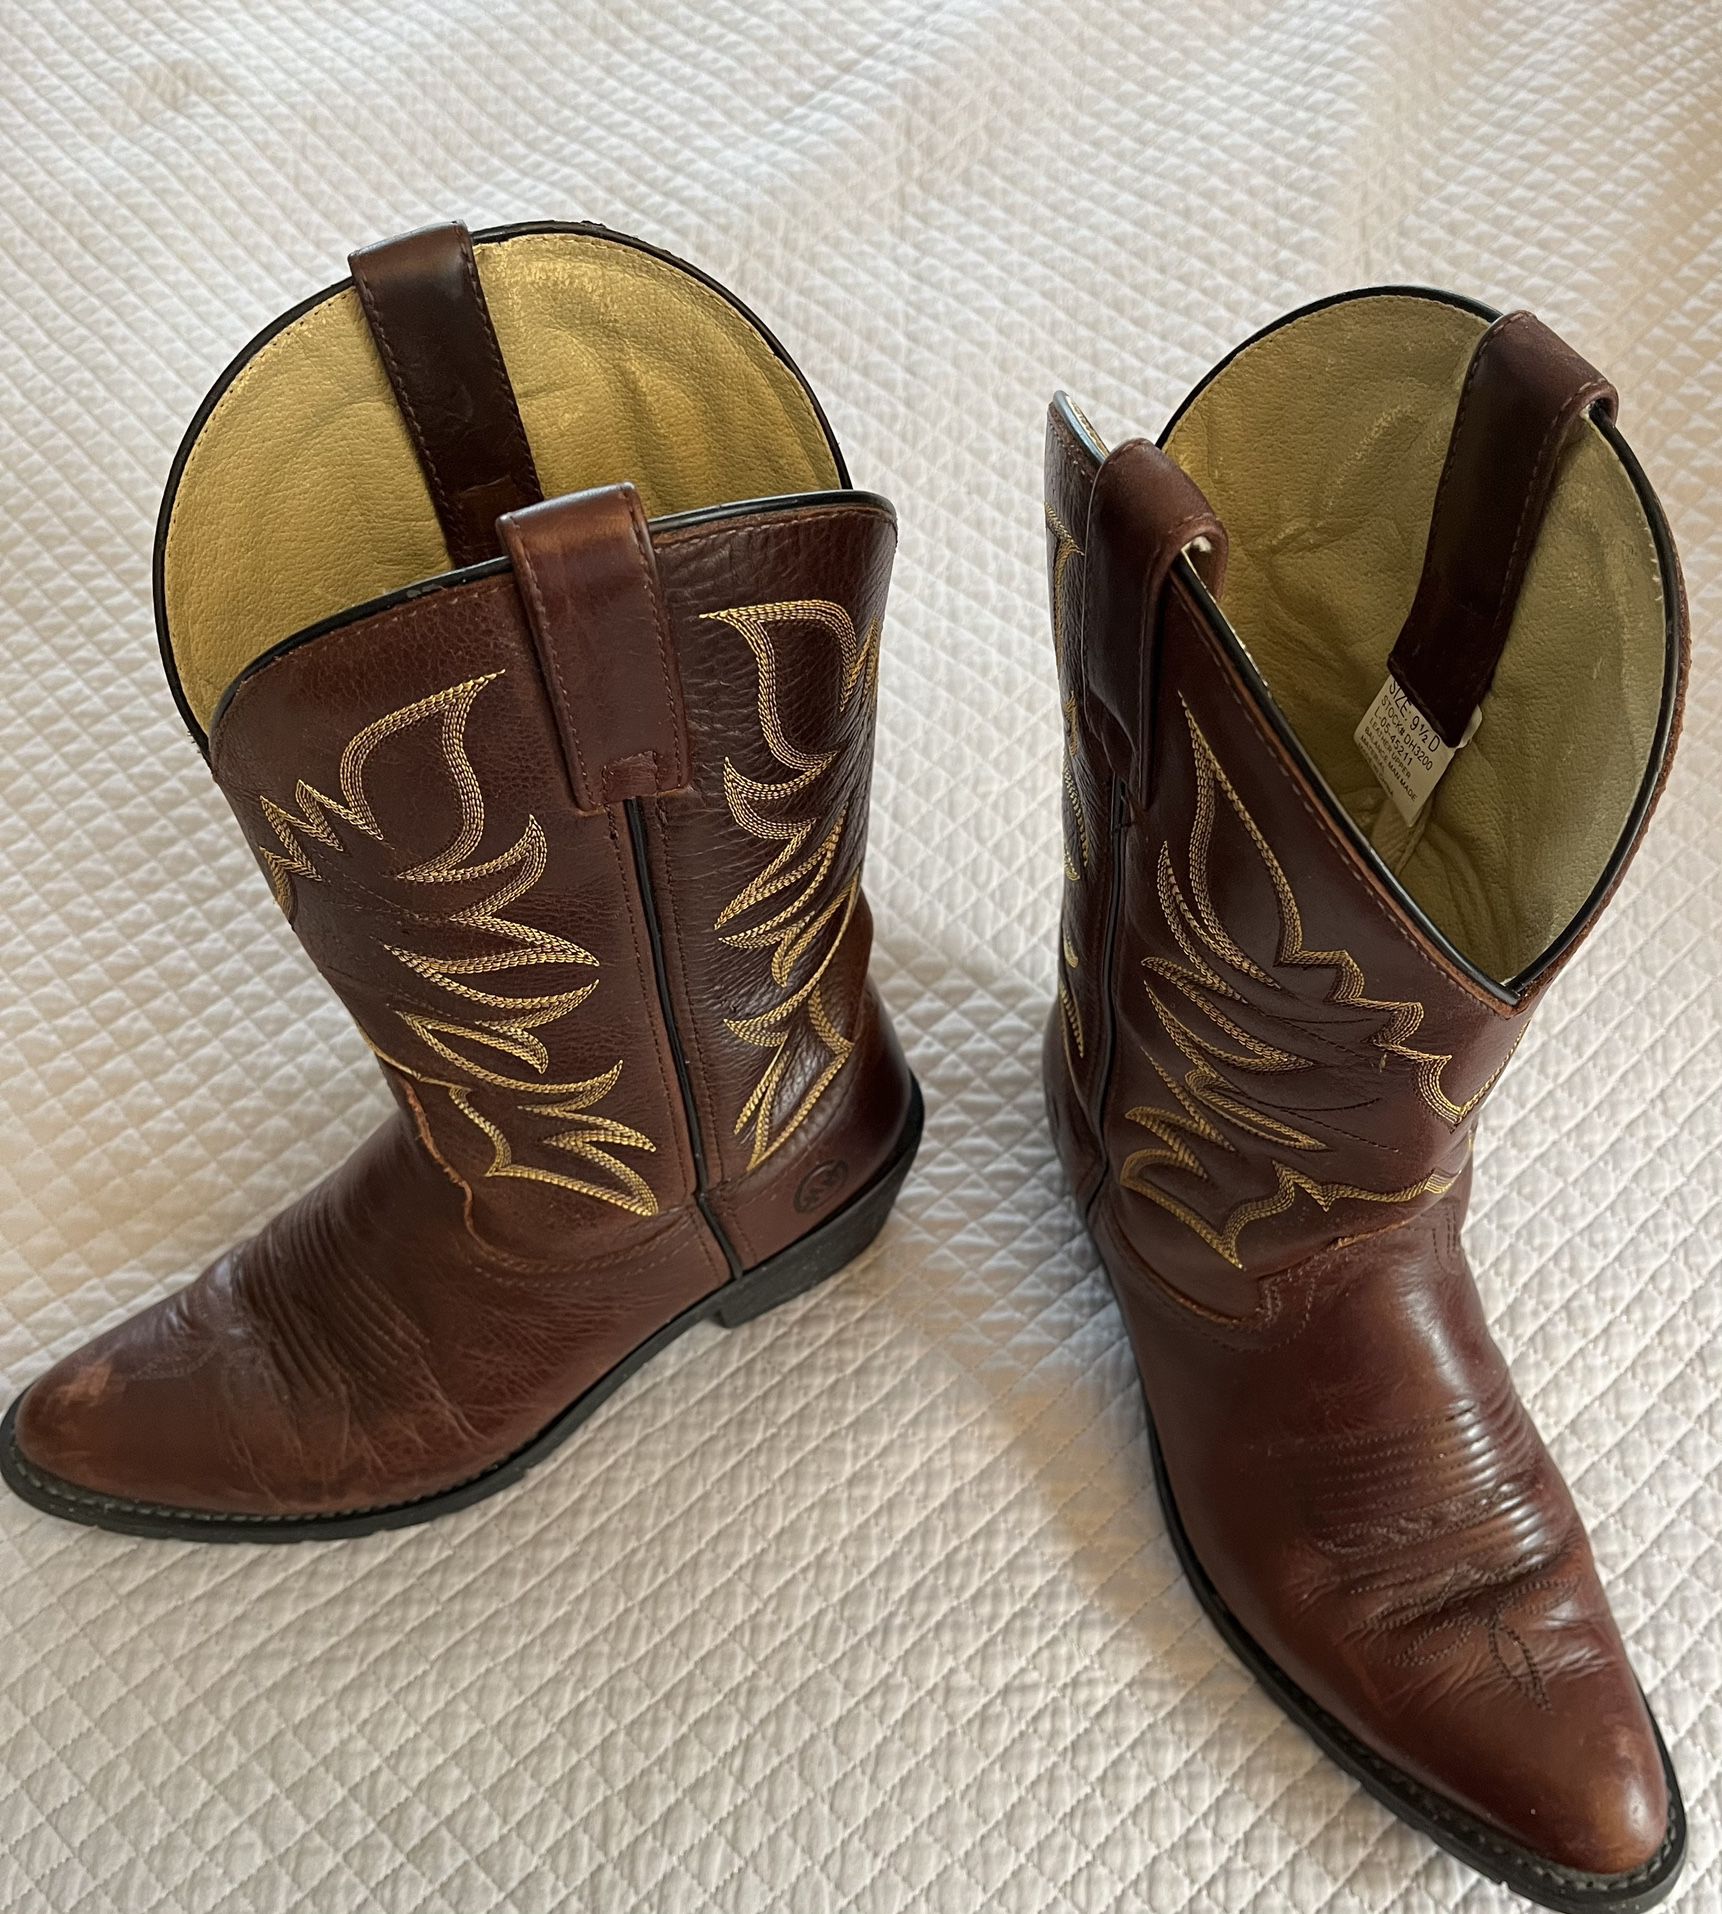 Men’s brown leather Cowboy boots